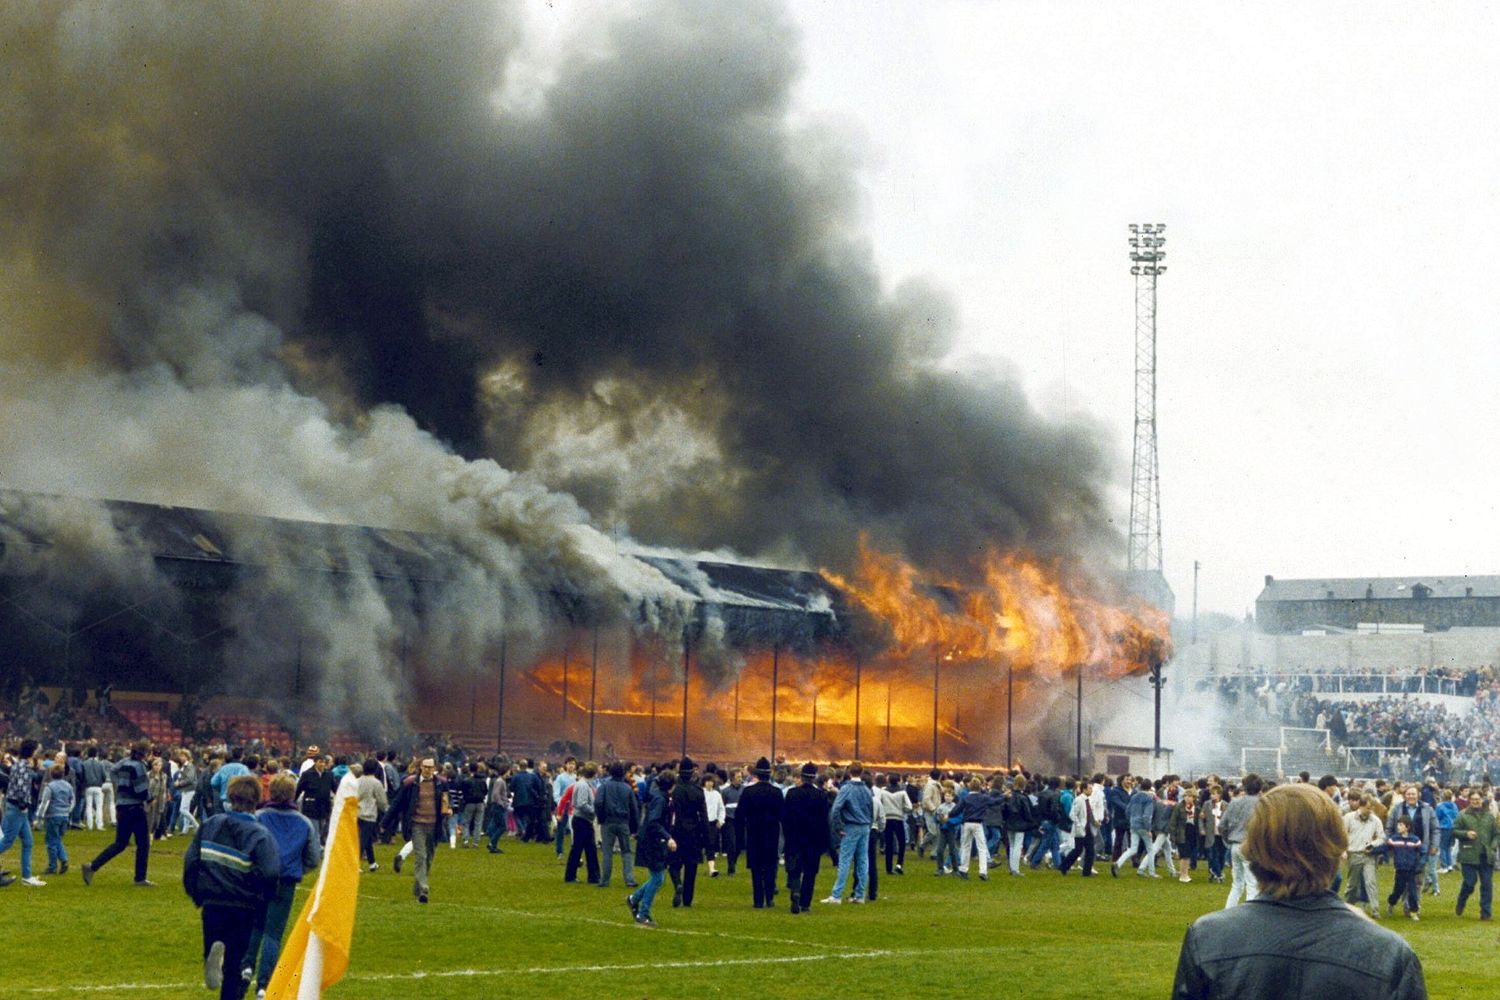 Bradford City стадион пожар. Брэдфорд Сити 1985. Пожар на футбольном стадионе 1985 Брэдфорд. Пожар на стадионе в Англии в 1985 году.